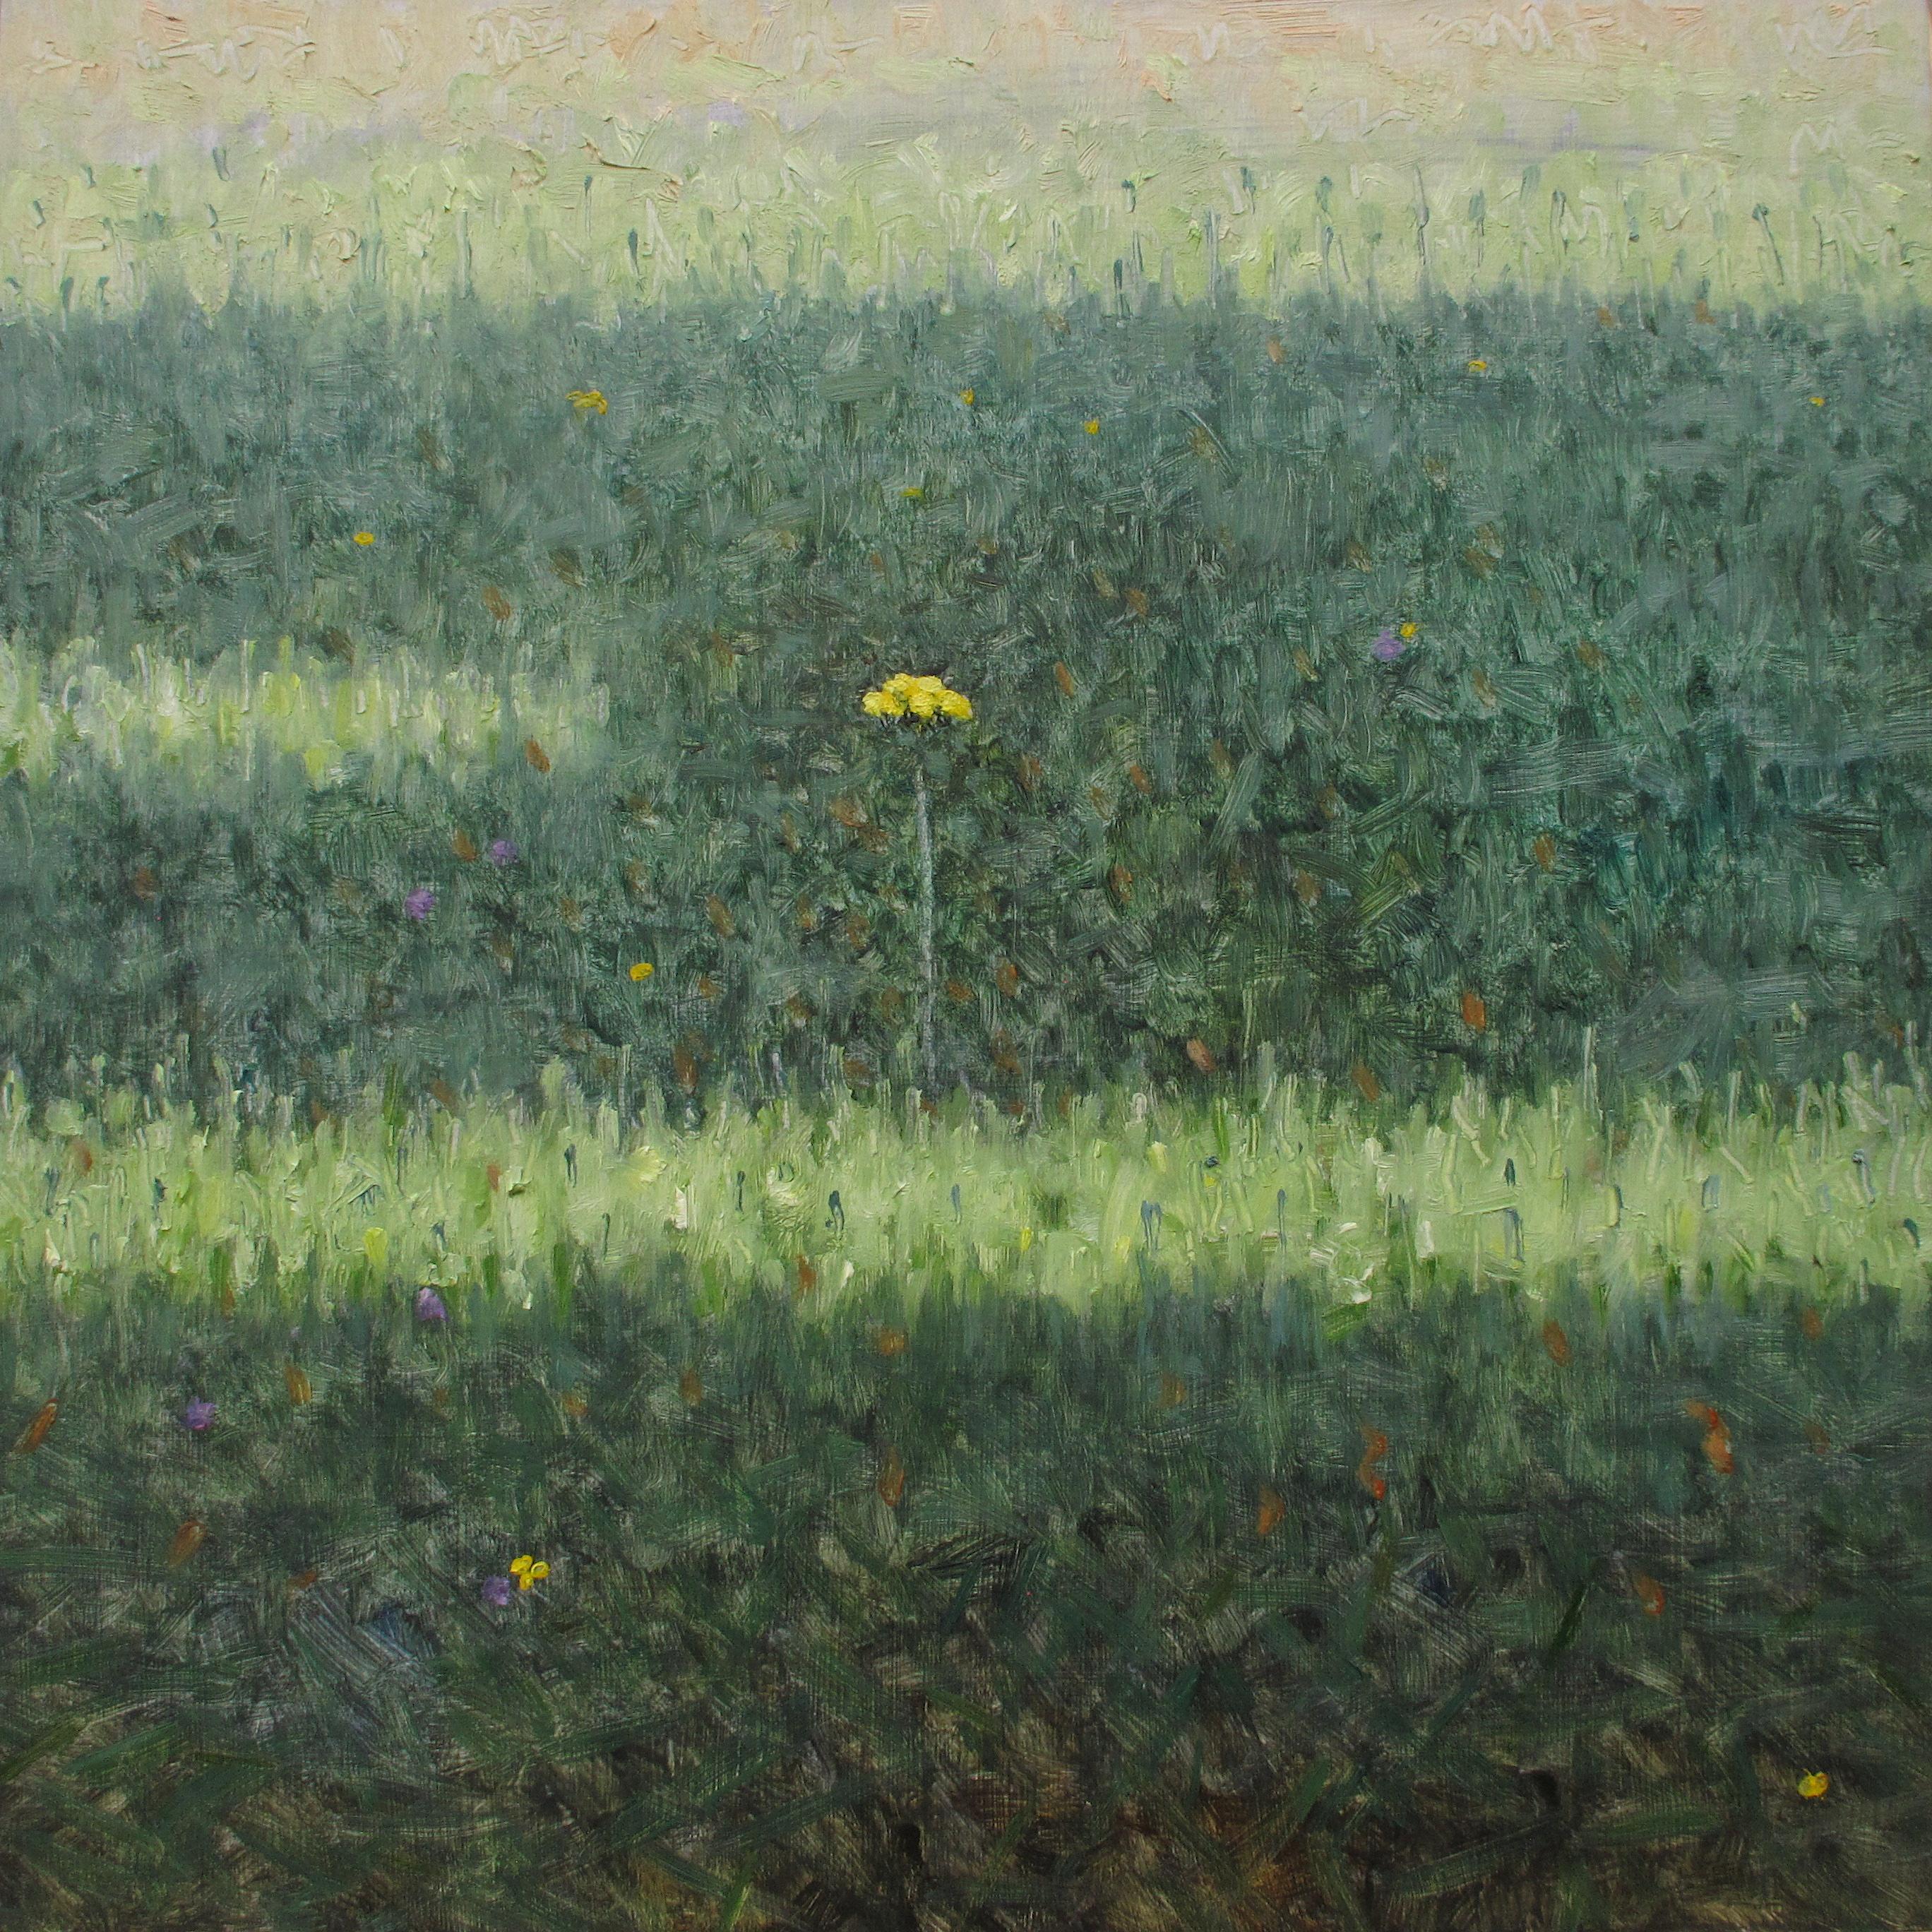 Field Painting July 22 2020, Botanical Landscape, Yellow Flower in Green Field